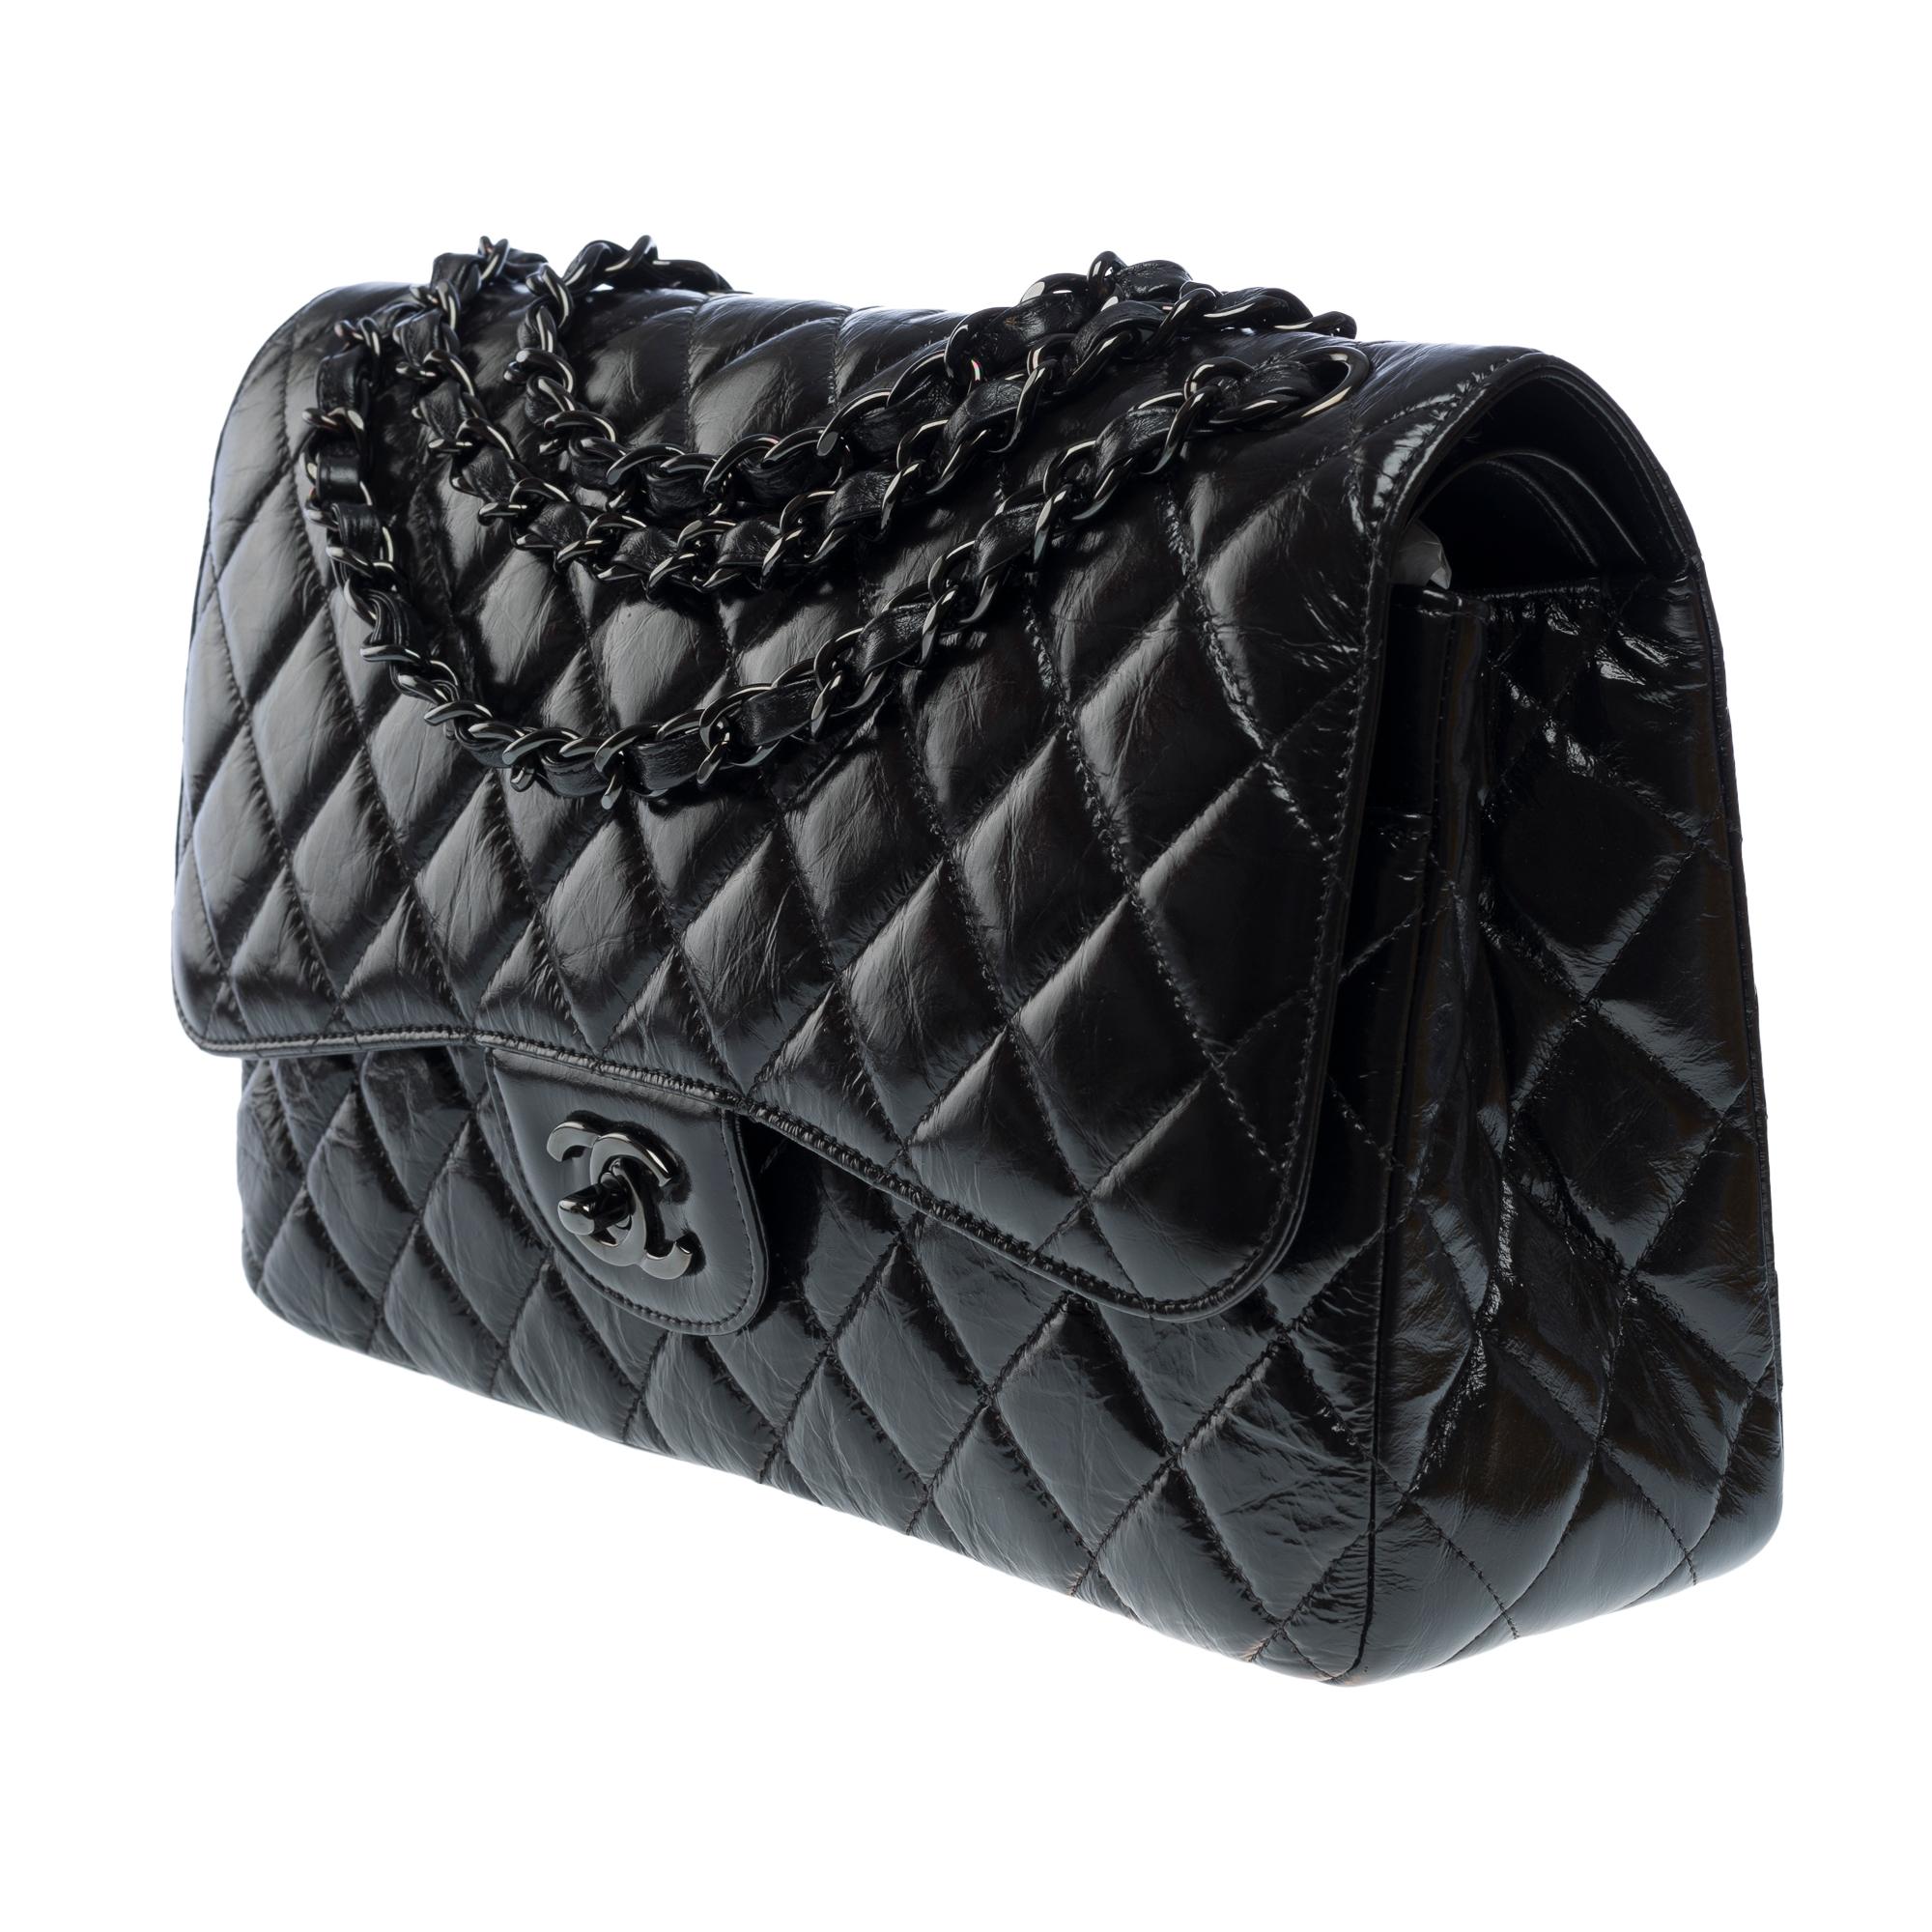 Women's SO BLACK Chanel Timeless Jumbo double flap shoulder bag in Black Glazed leather